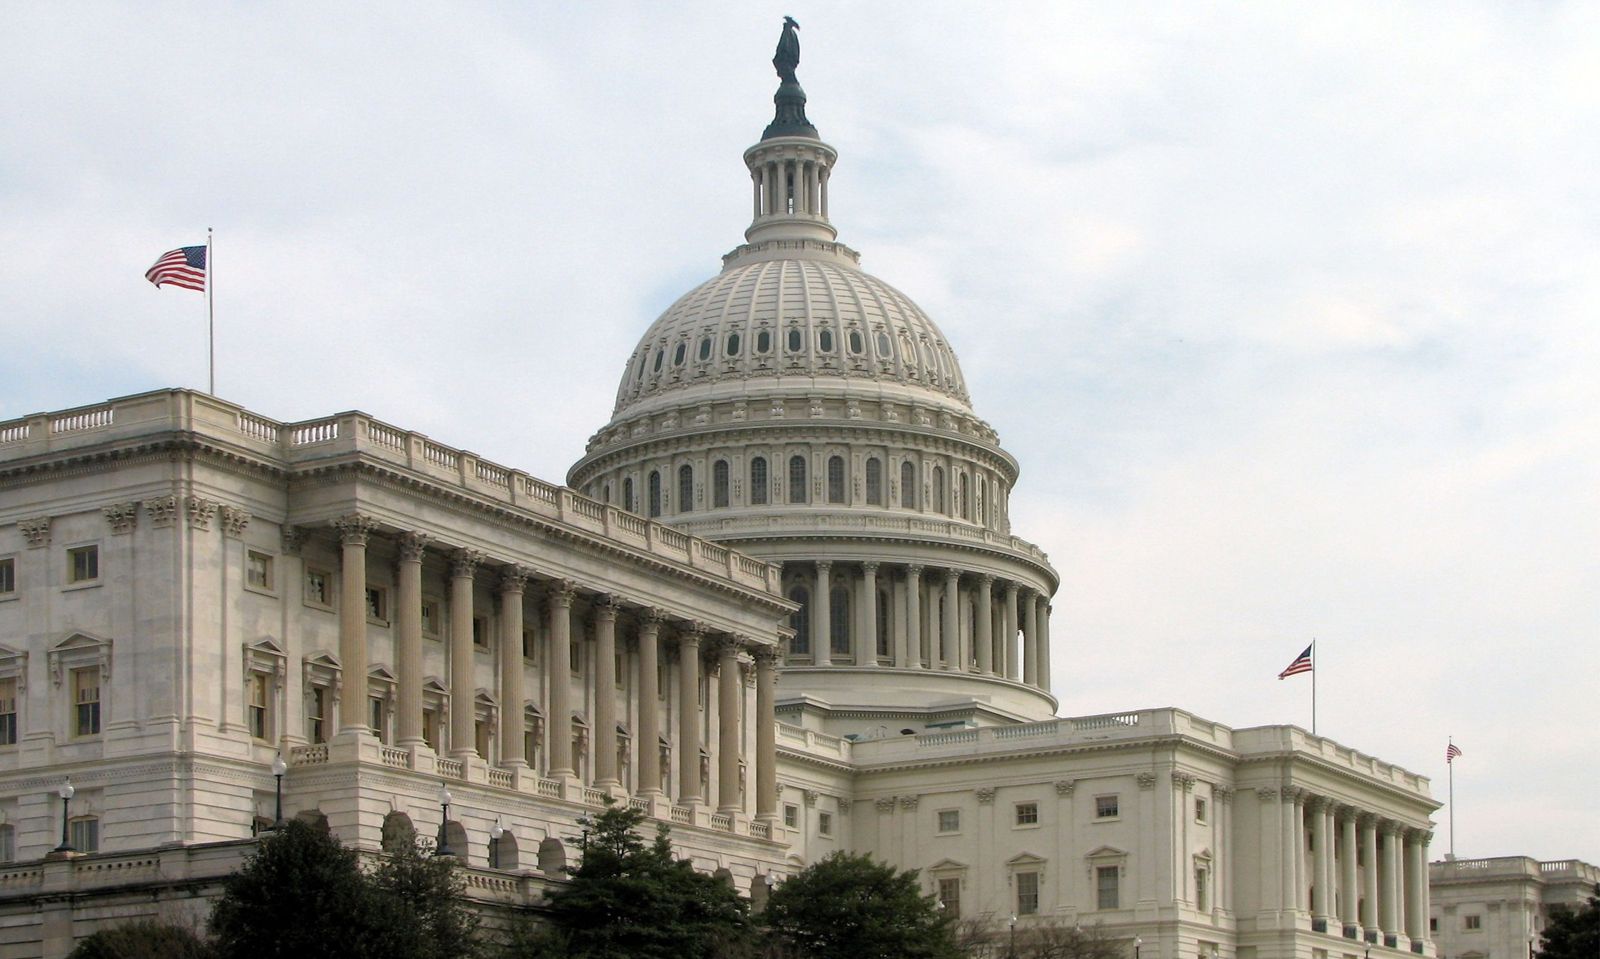 Two Senators Launch Joint Bill Proposing Massive Adult Site Regs